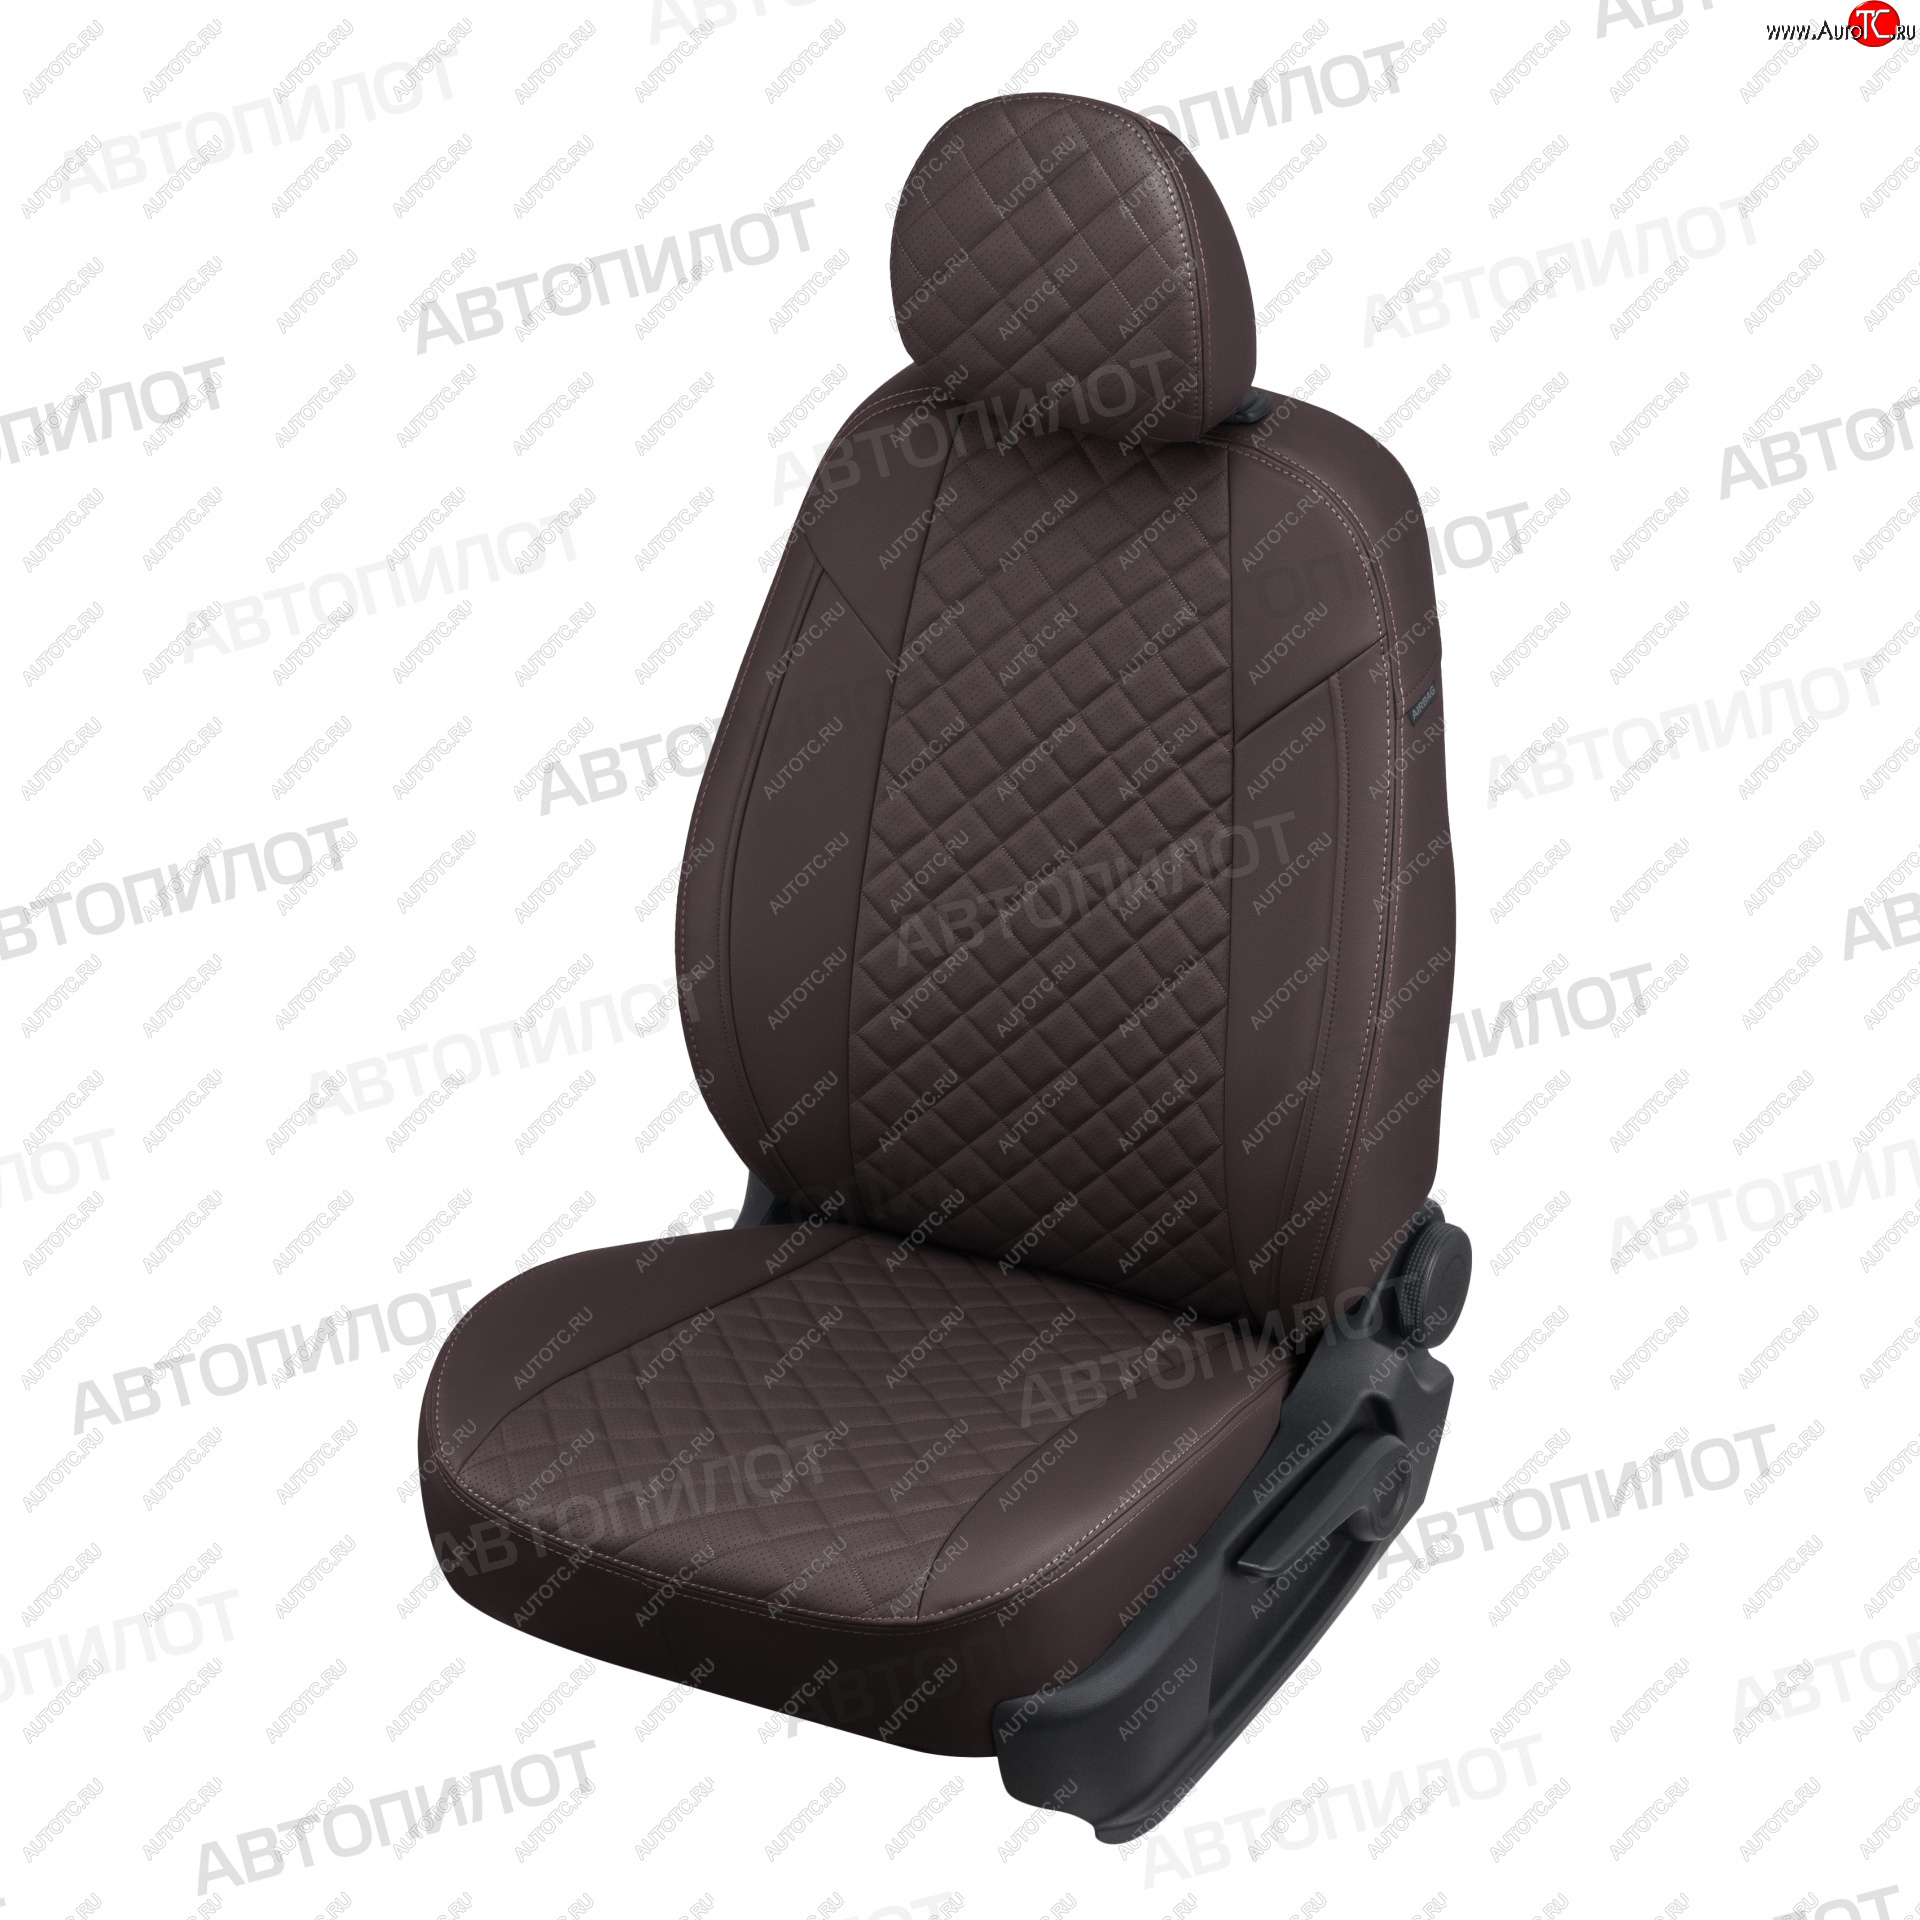 13 999 р. Чехлы сидений (экокожа) Автопилот Ромб  Ford Mondeo (2007-2014) (шоколад)